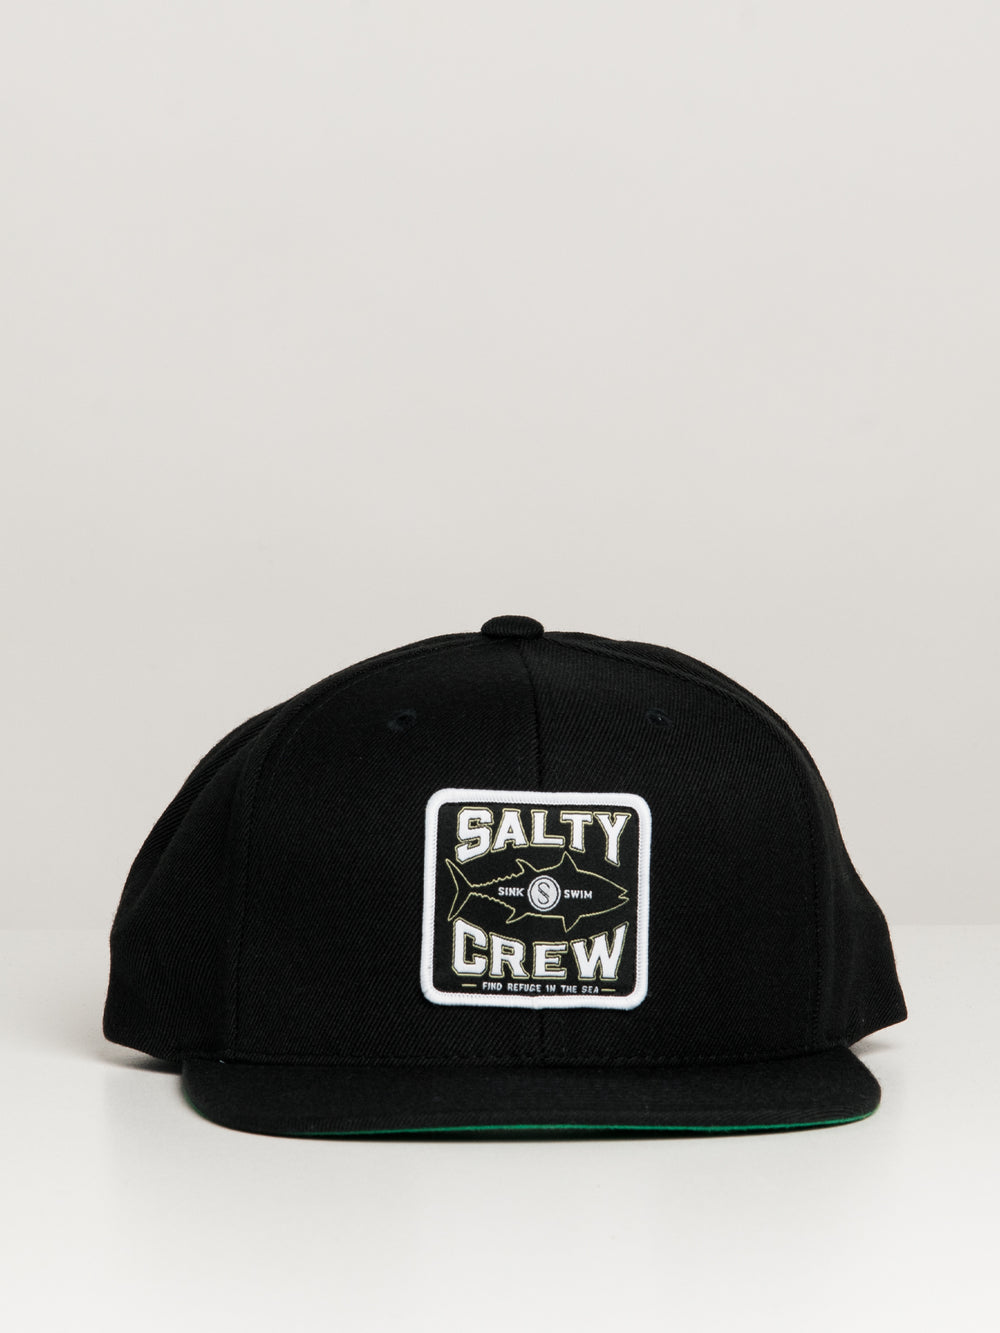 SALTY CREW Salty Crew Tight Lines 6 Panel Snapback Hat - Clearance Black 1SZ